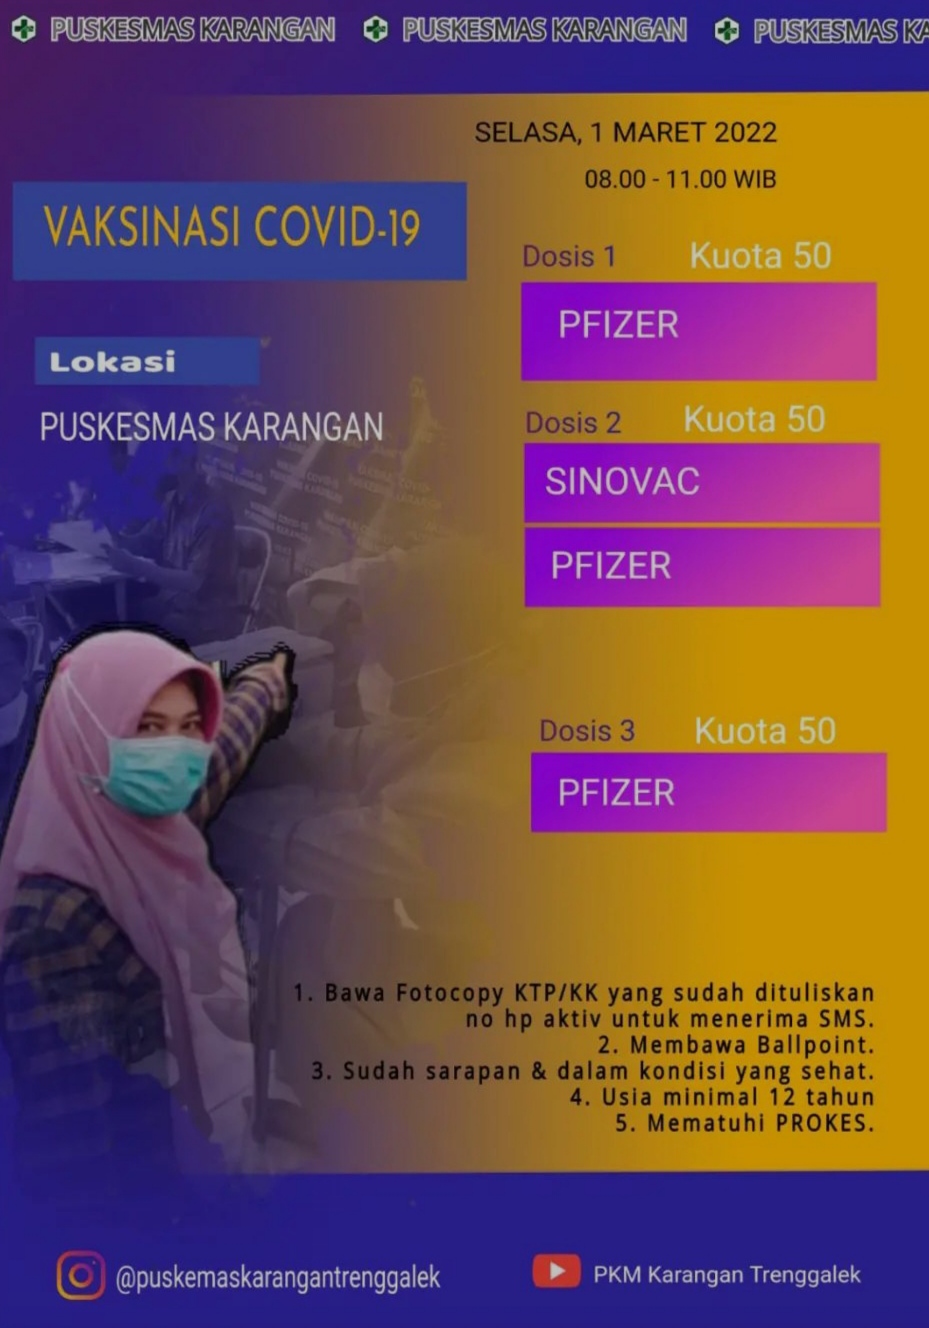 Jadwal vaksin Covid-19 di Kecamatan Trenggalek